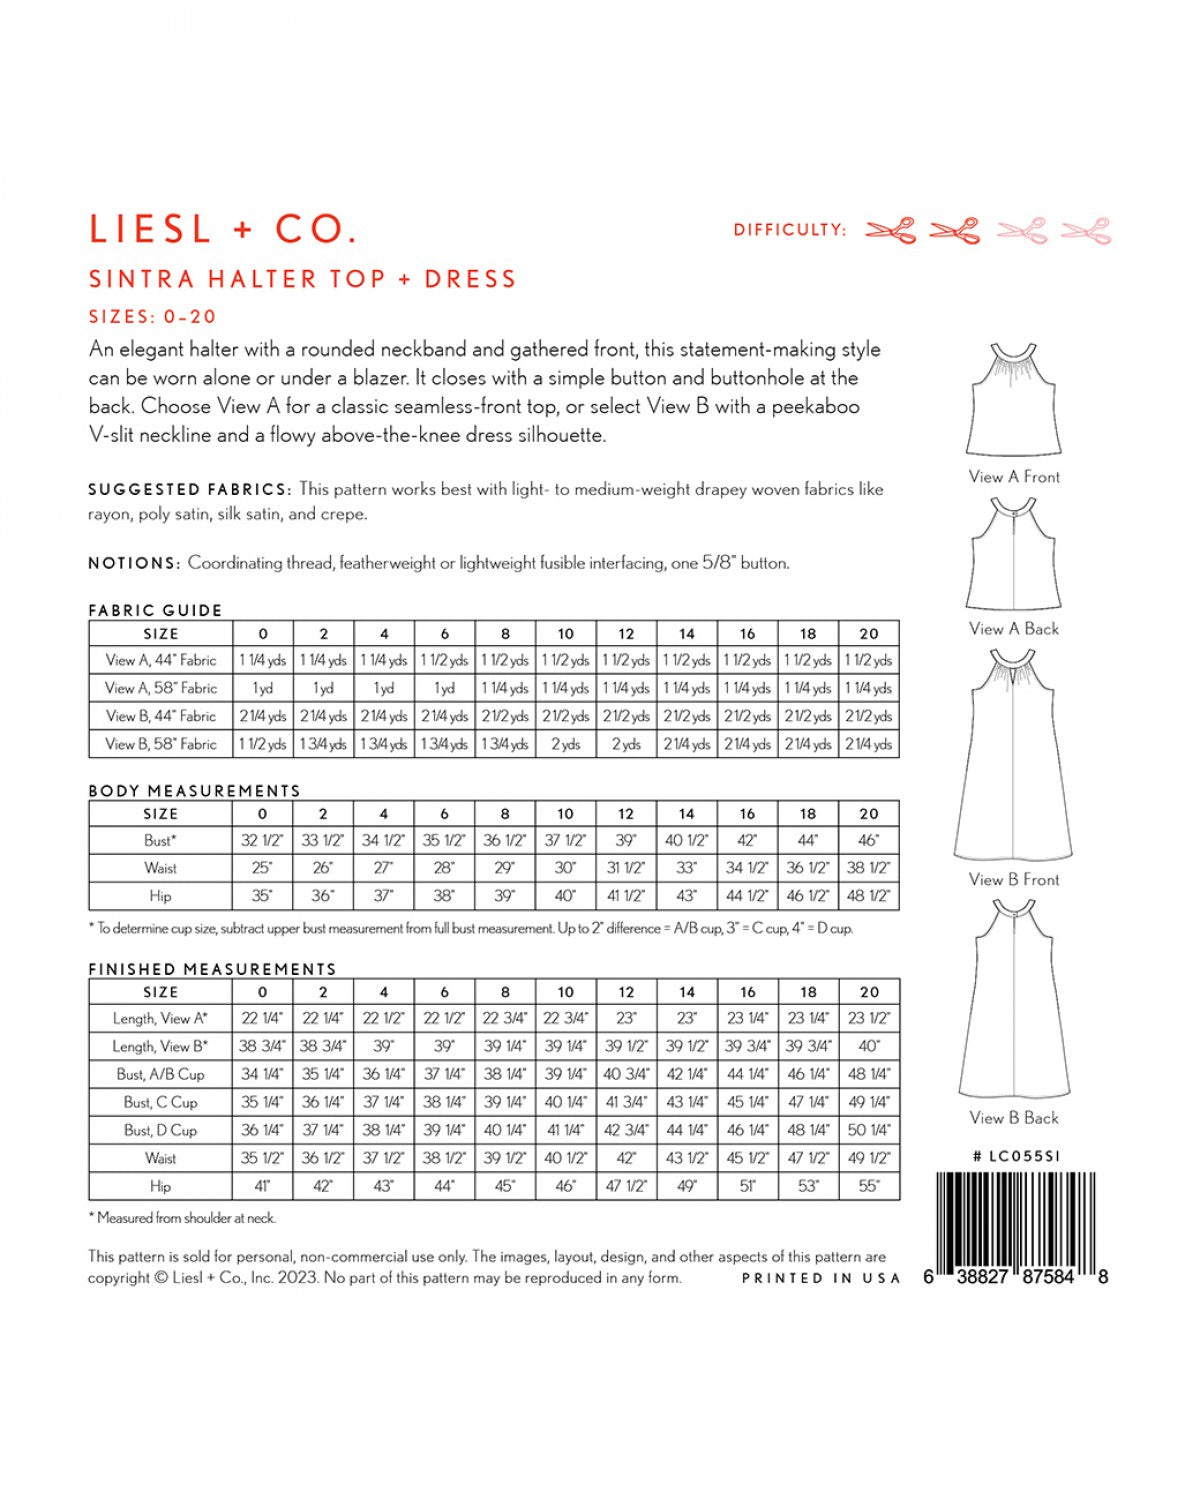 Liesl + Co - Sintra Halter Top & Dress Sewing Pattern